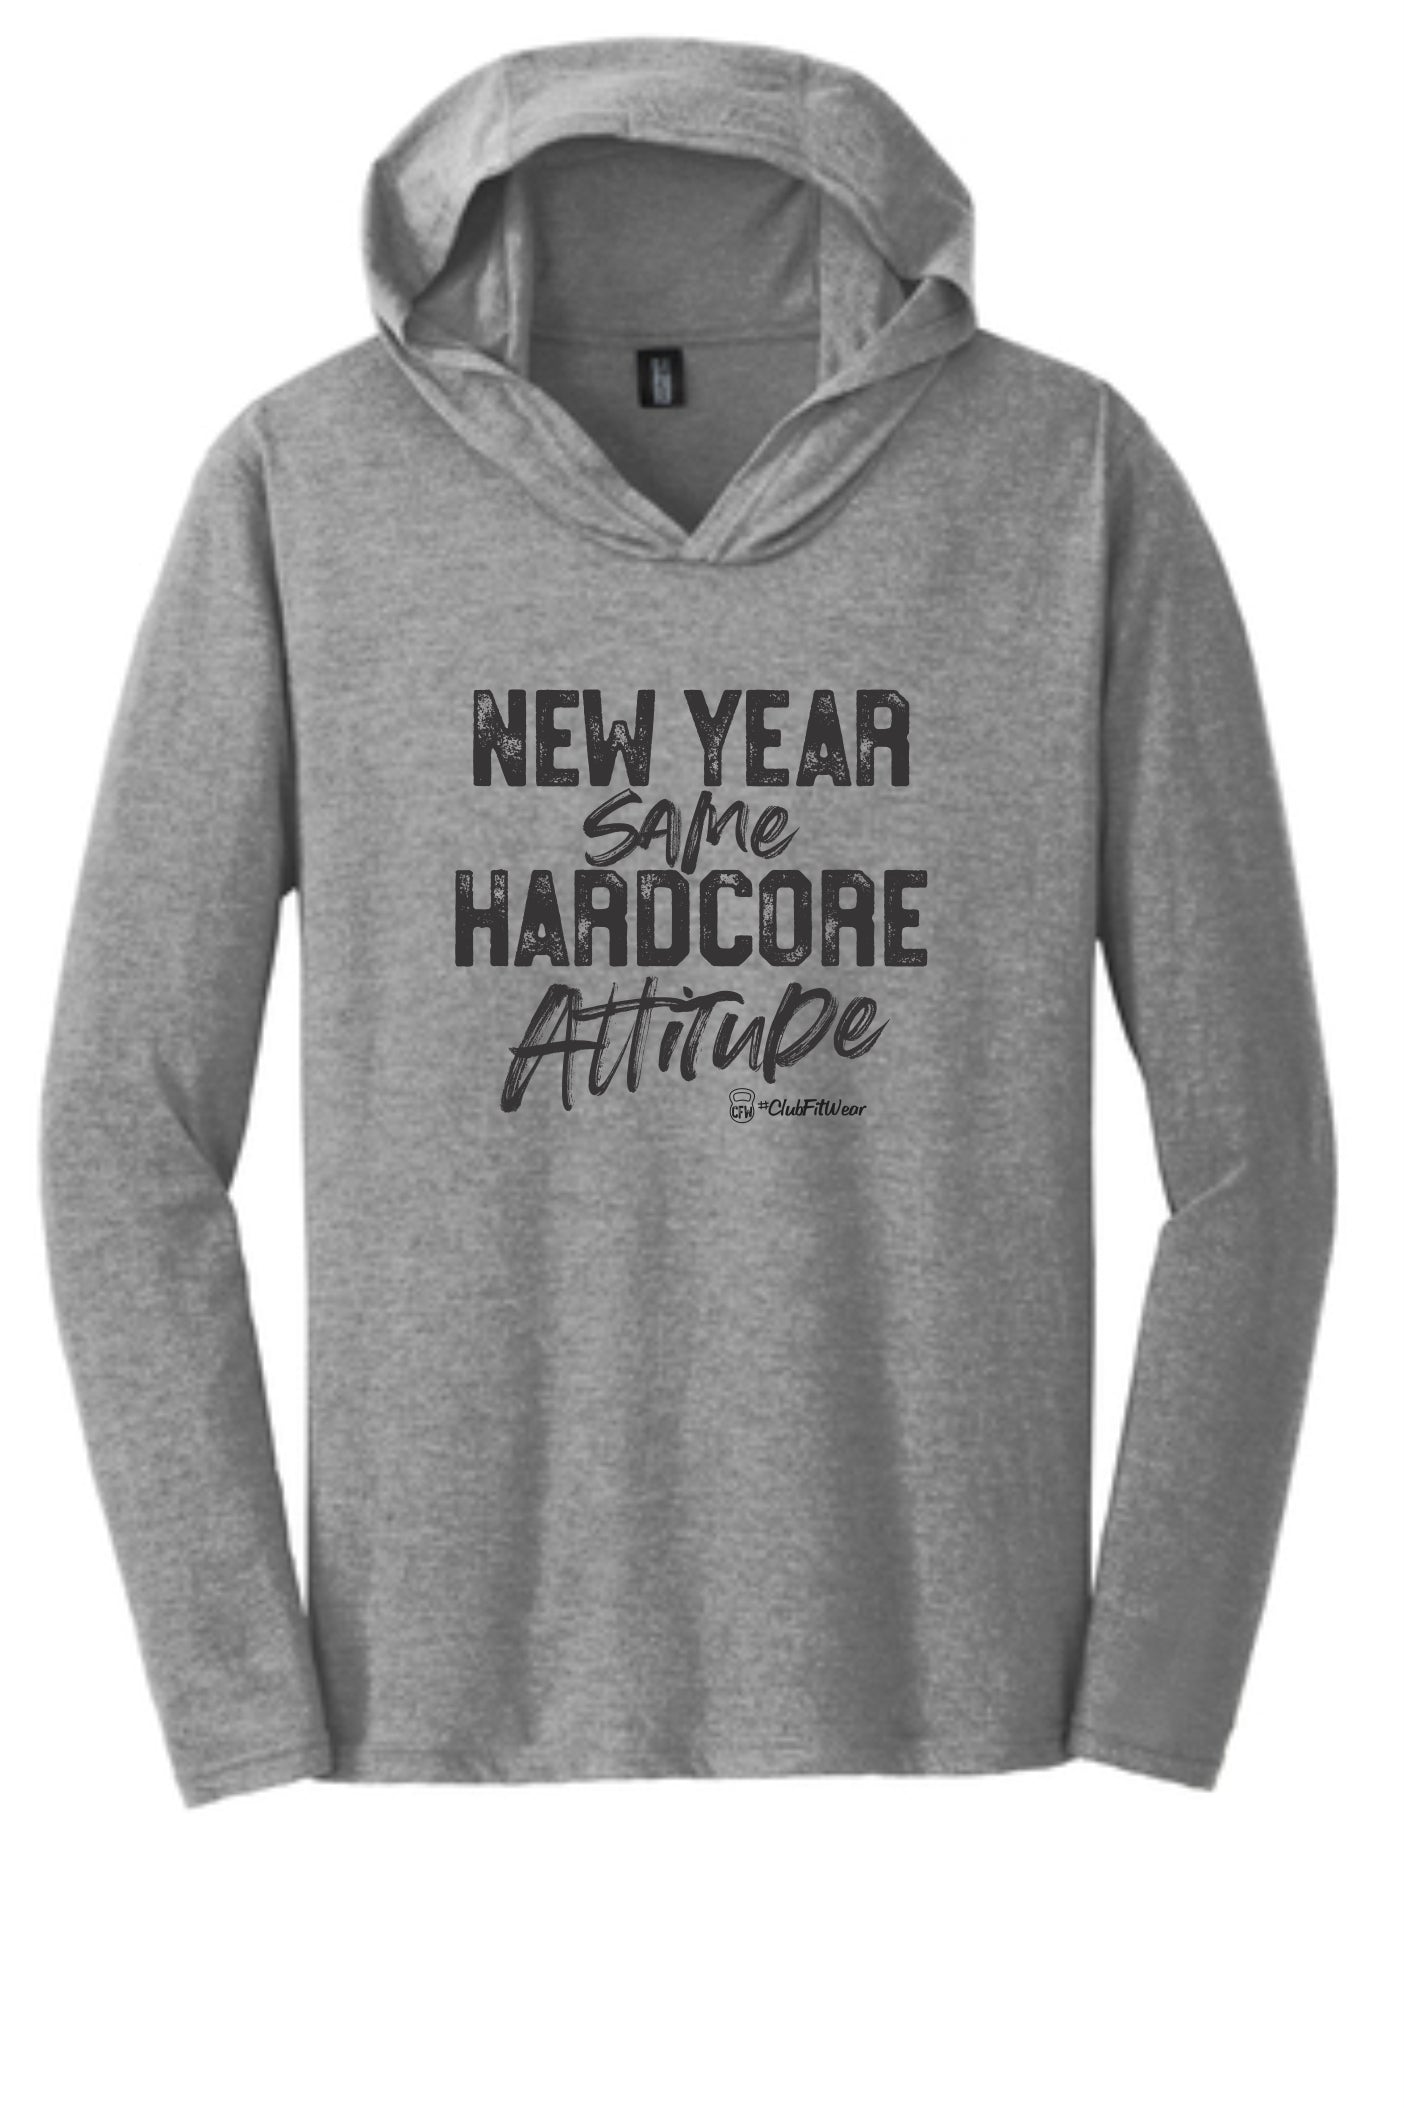 New Year Same Hardcore Attitude - Unisex Hooded Pullover